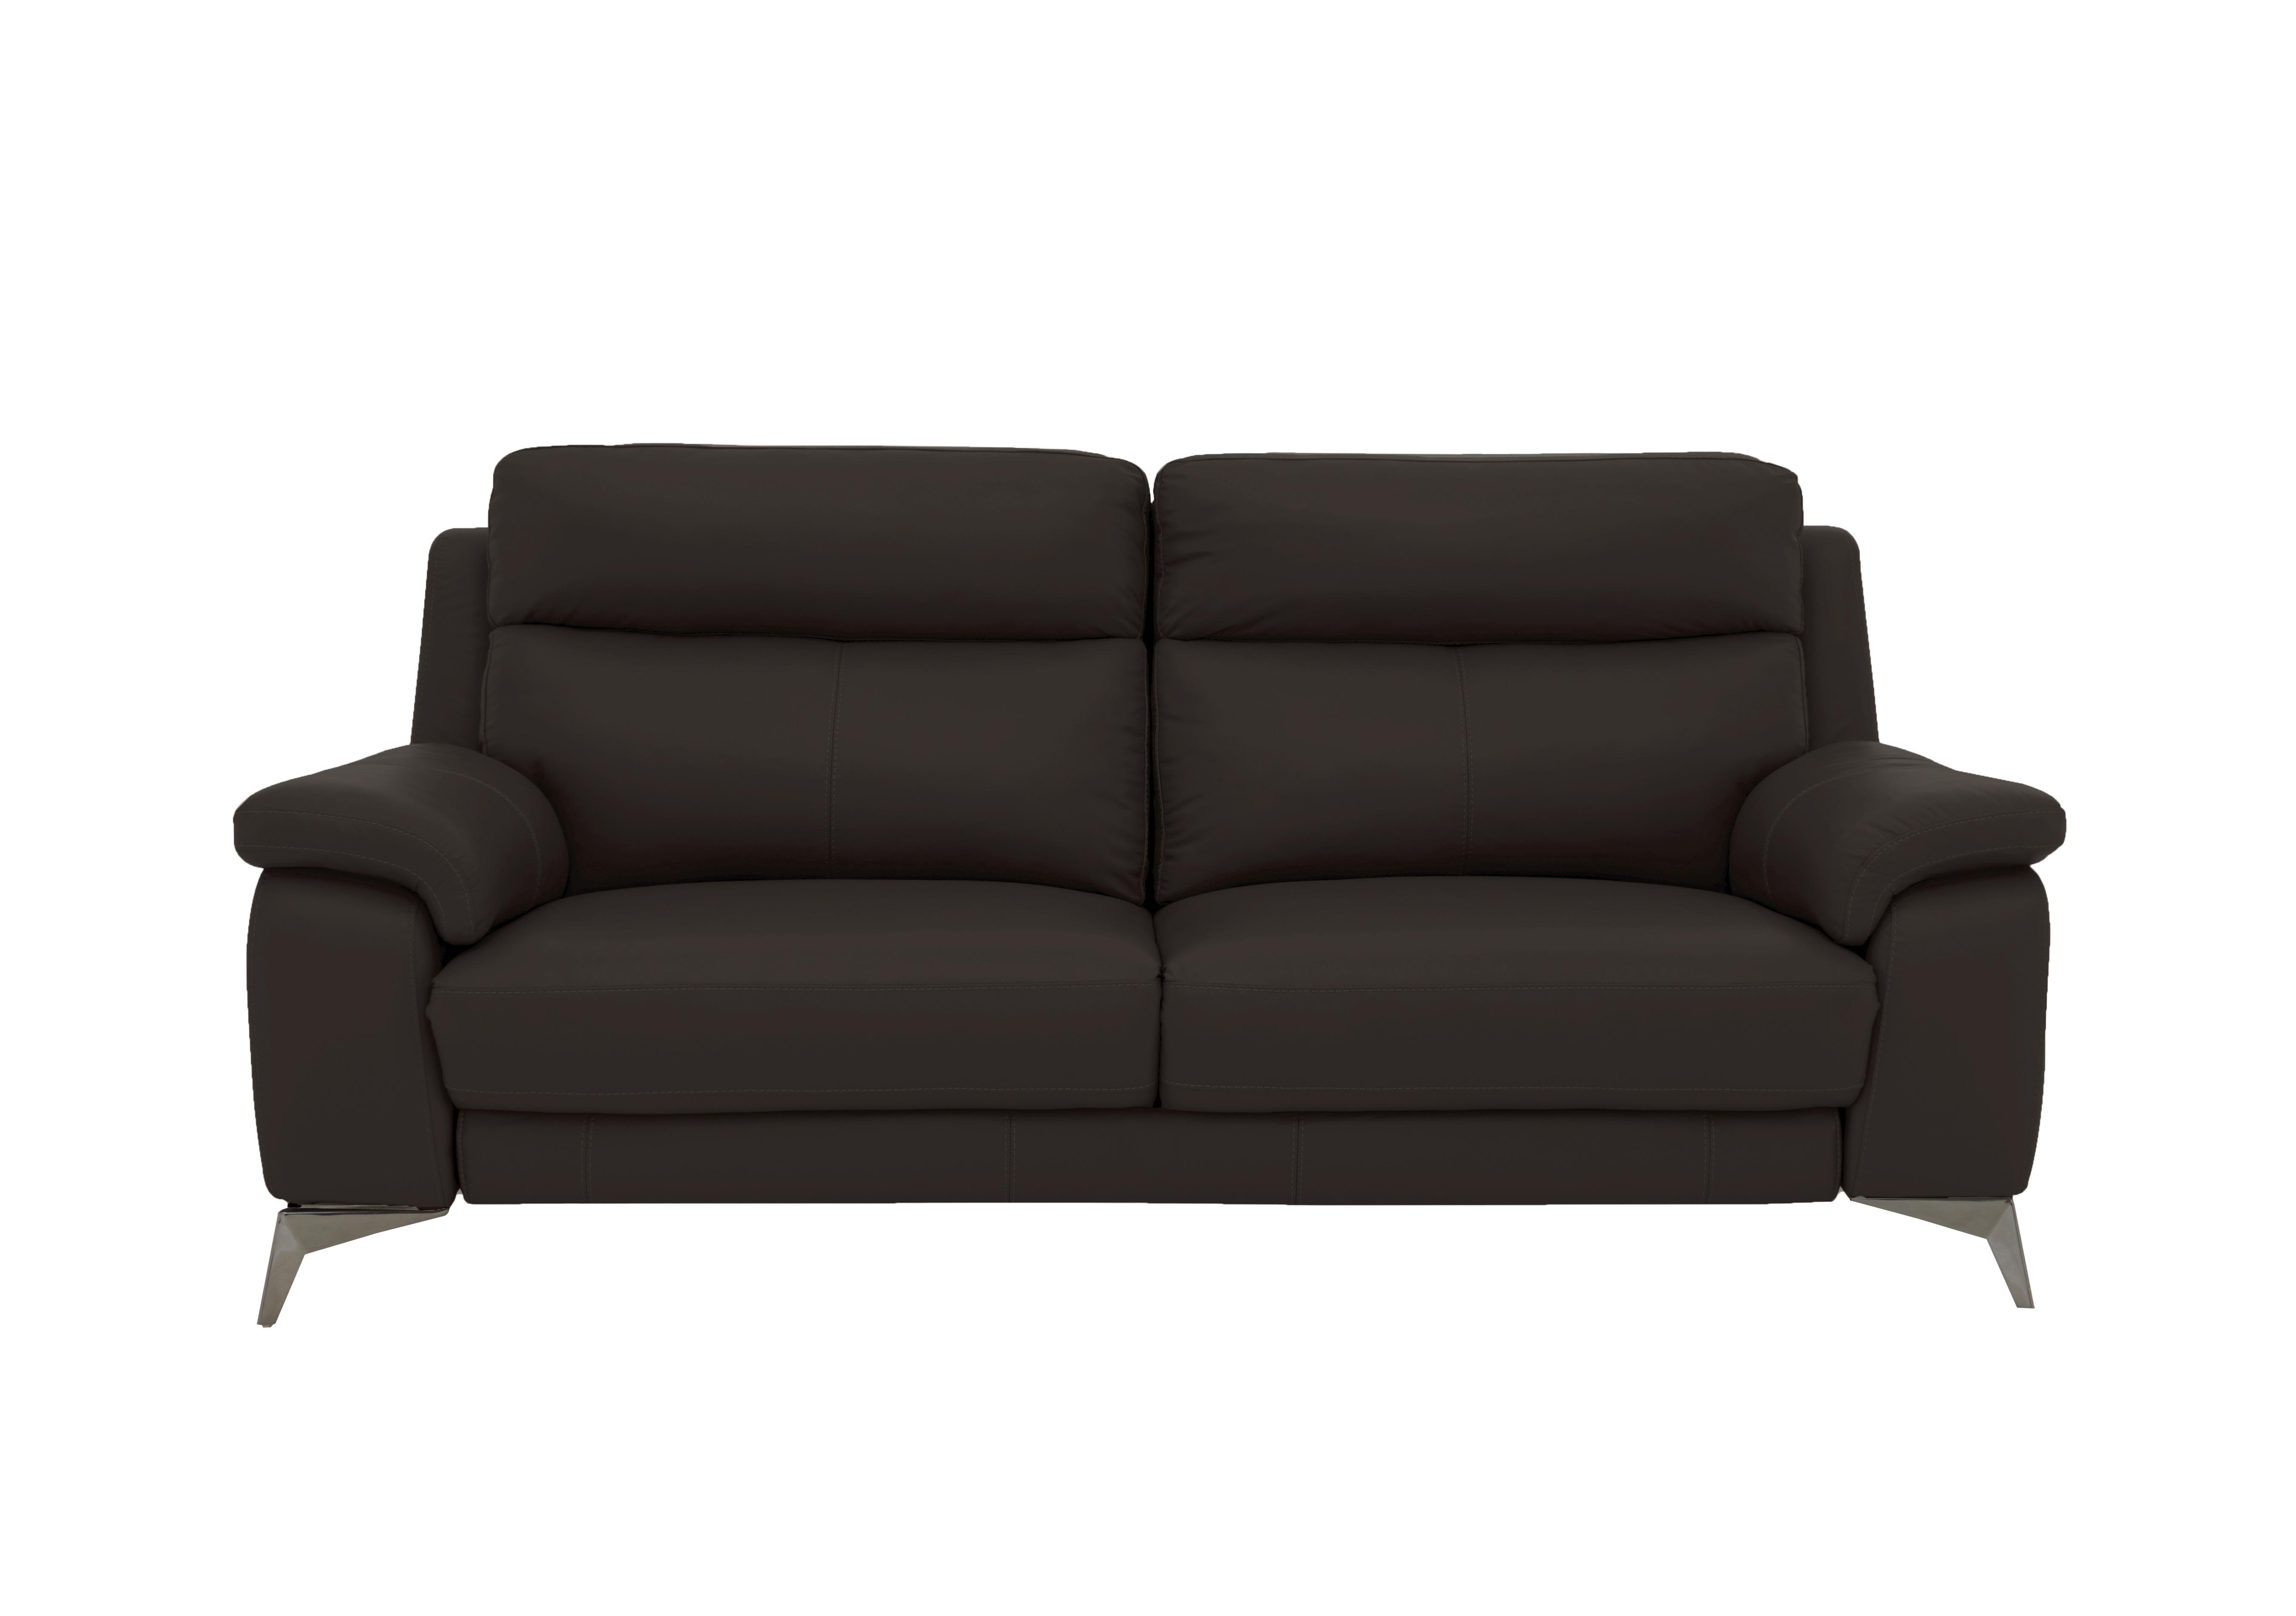 Missouri 3 Seater Leather Sofa in Bv-1748 Dark Chocolate on Furniture Village